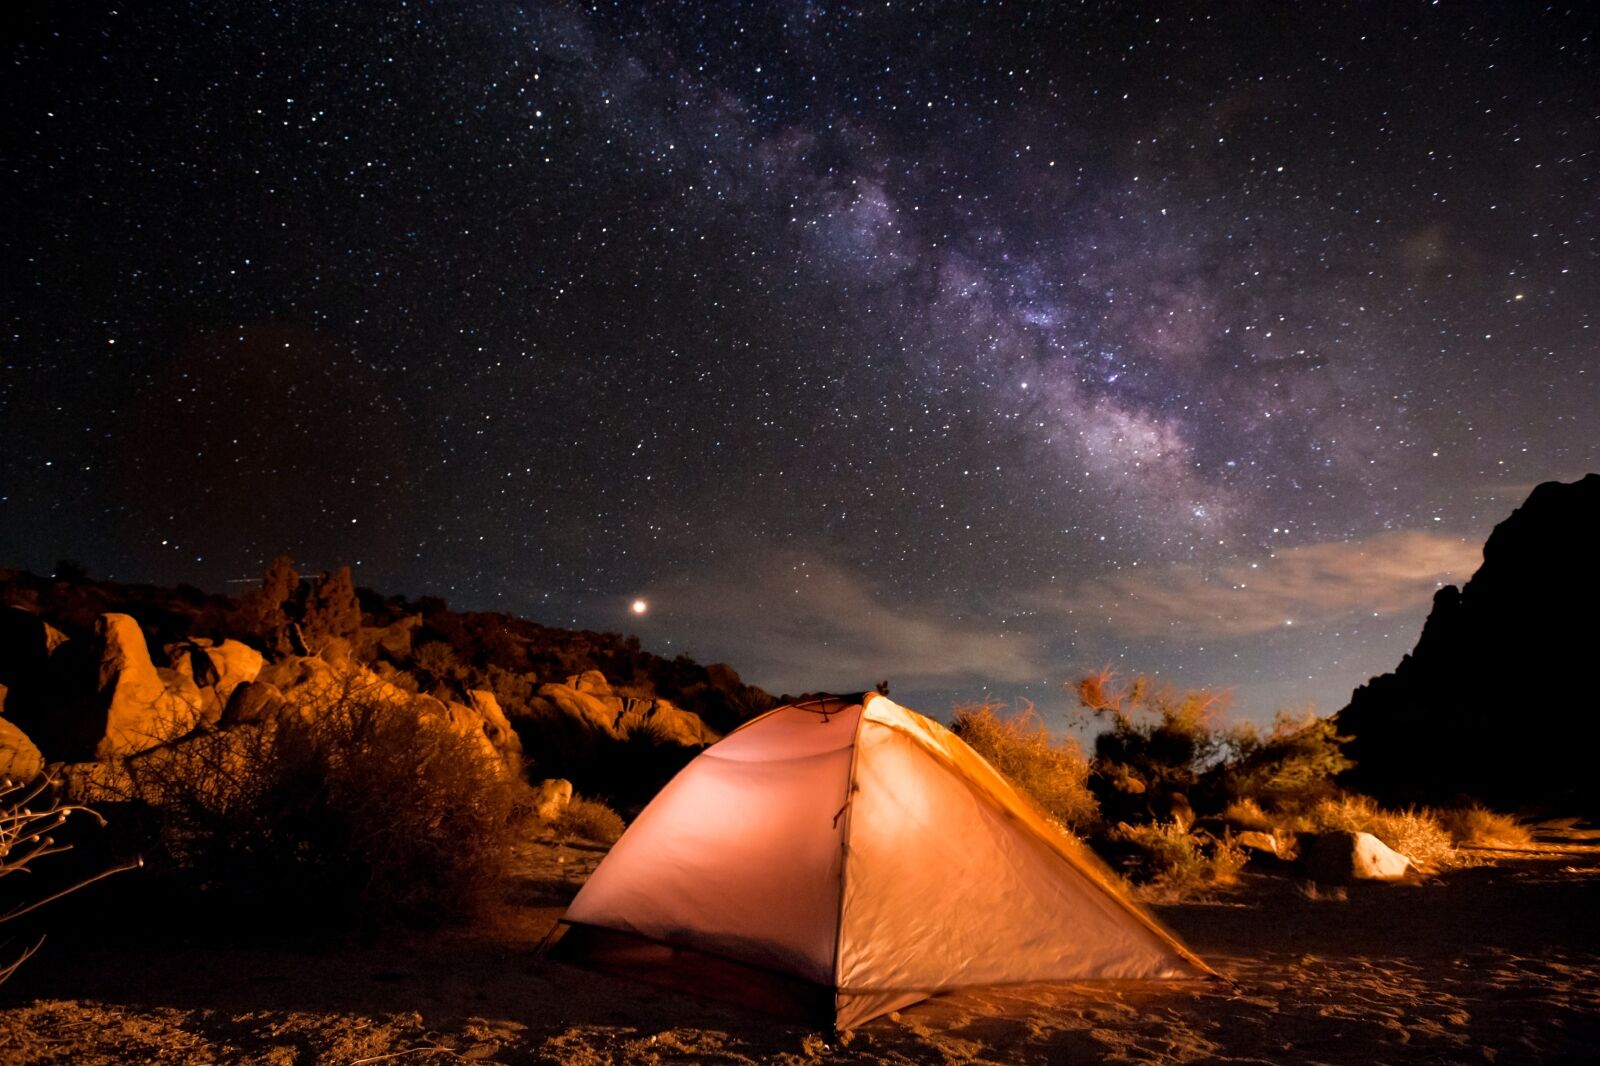 Joshua Tree Camping with Milky Way